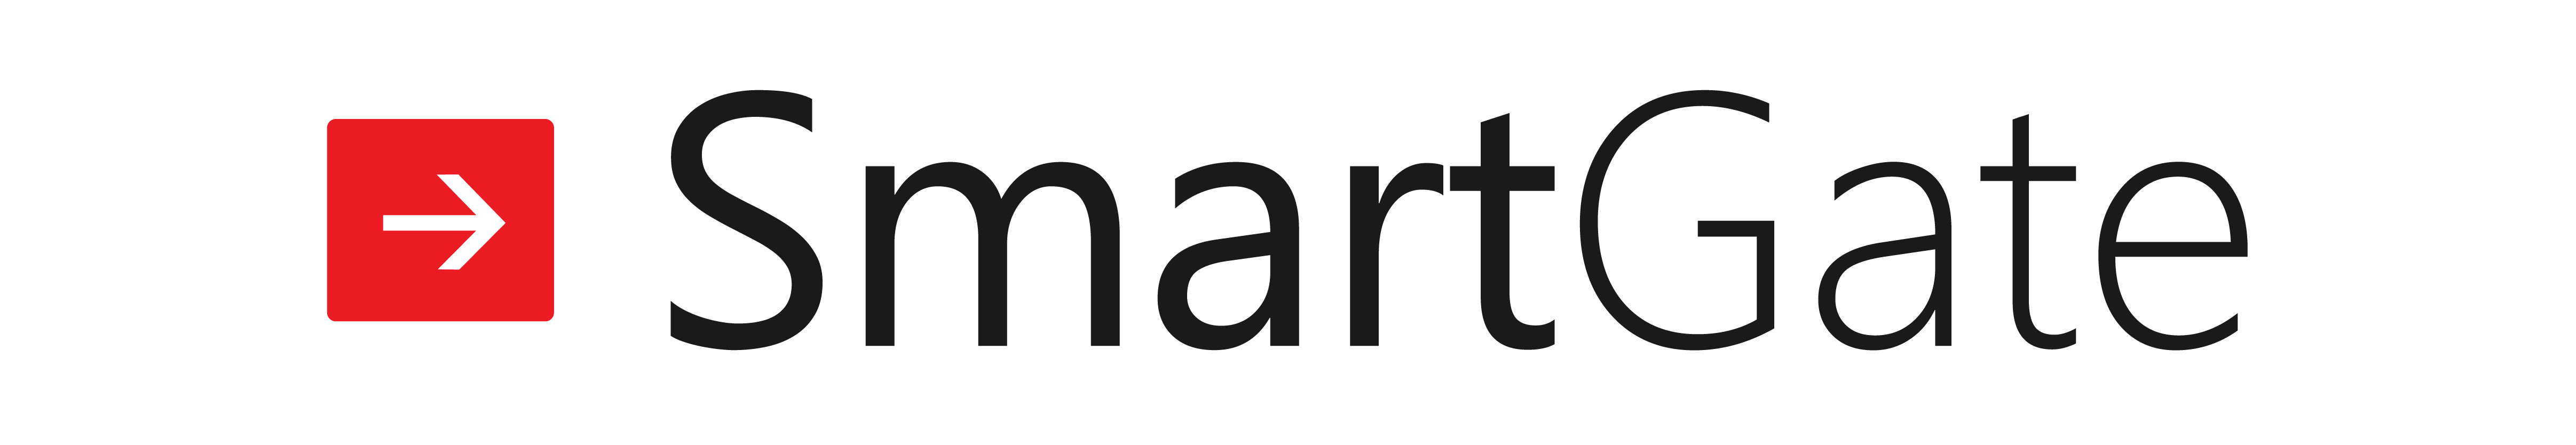 SmartGate Logo